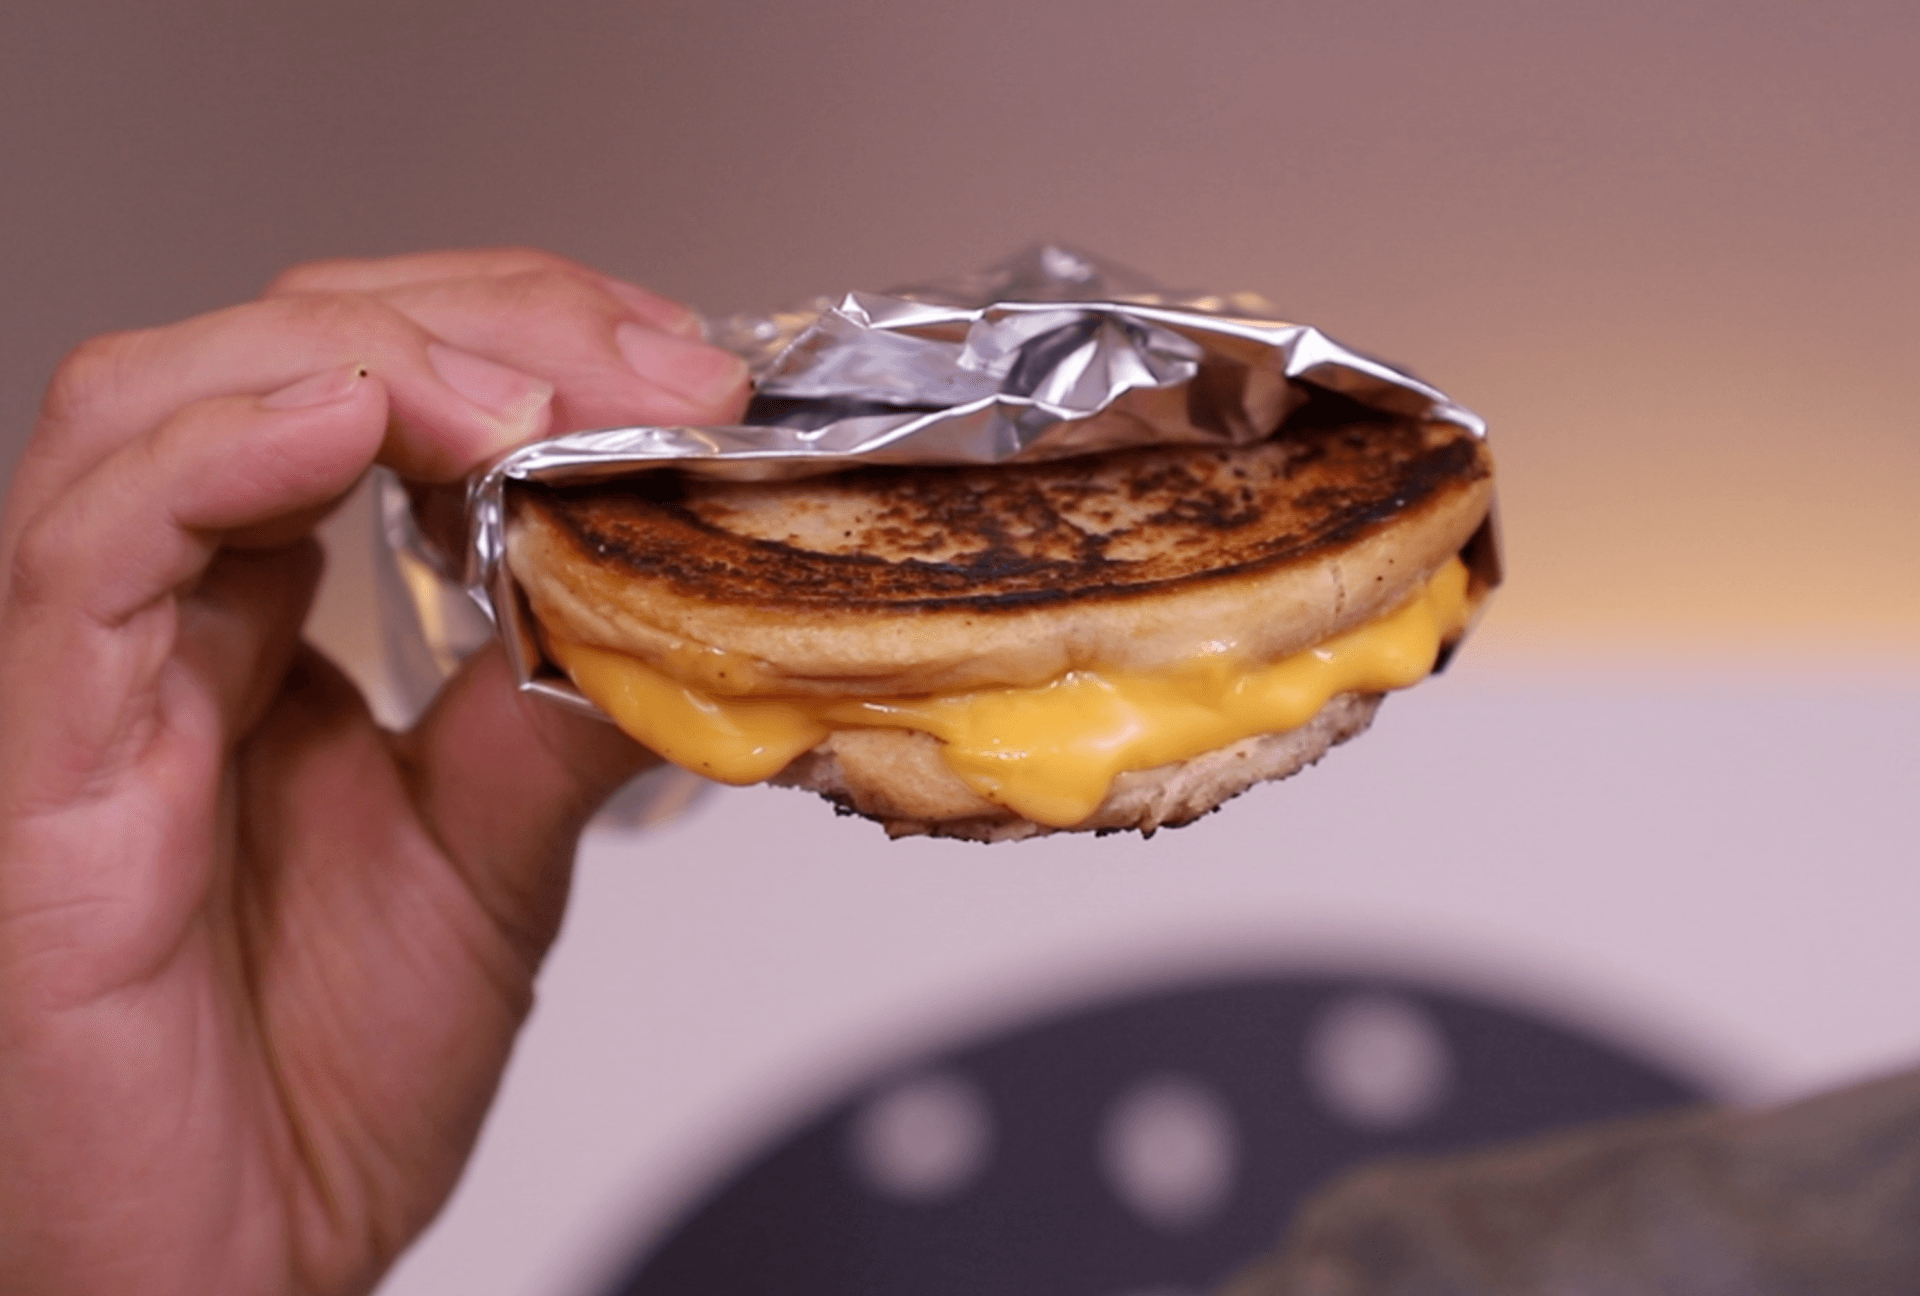 HOMEMADE MrBeast Burger Recipe - How to make a Mr Beast Burger at home EASY  